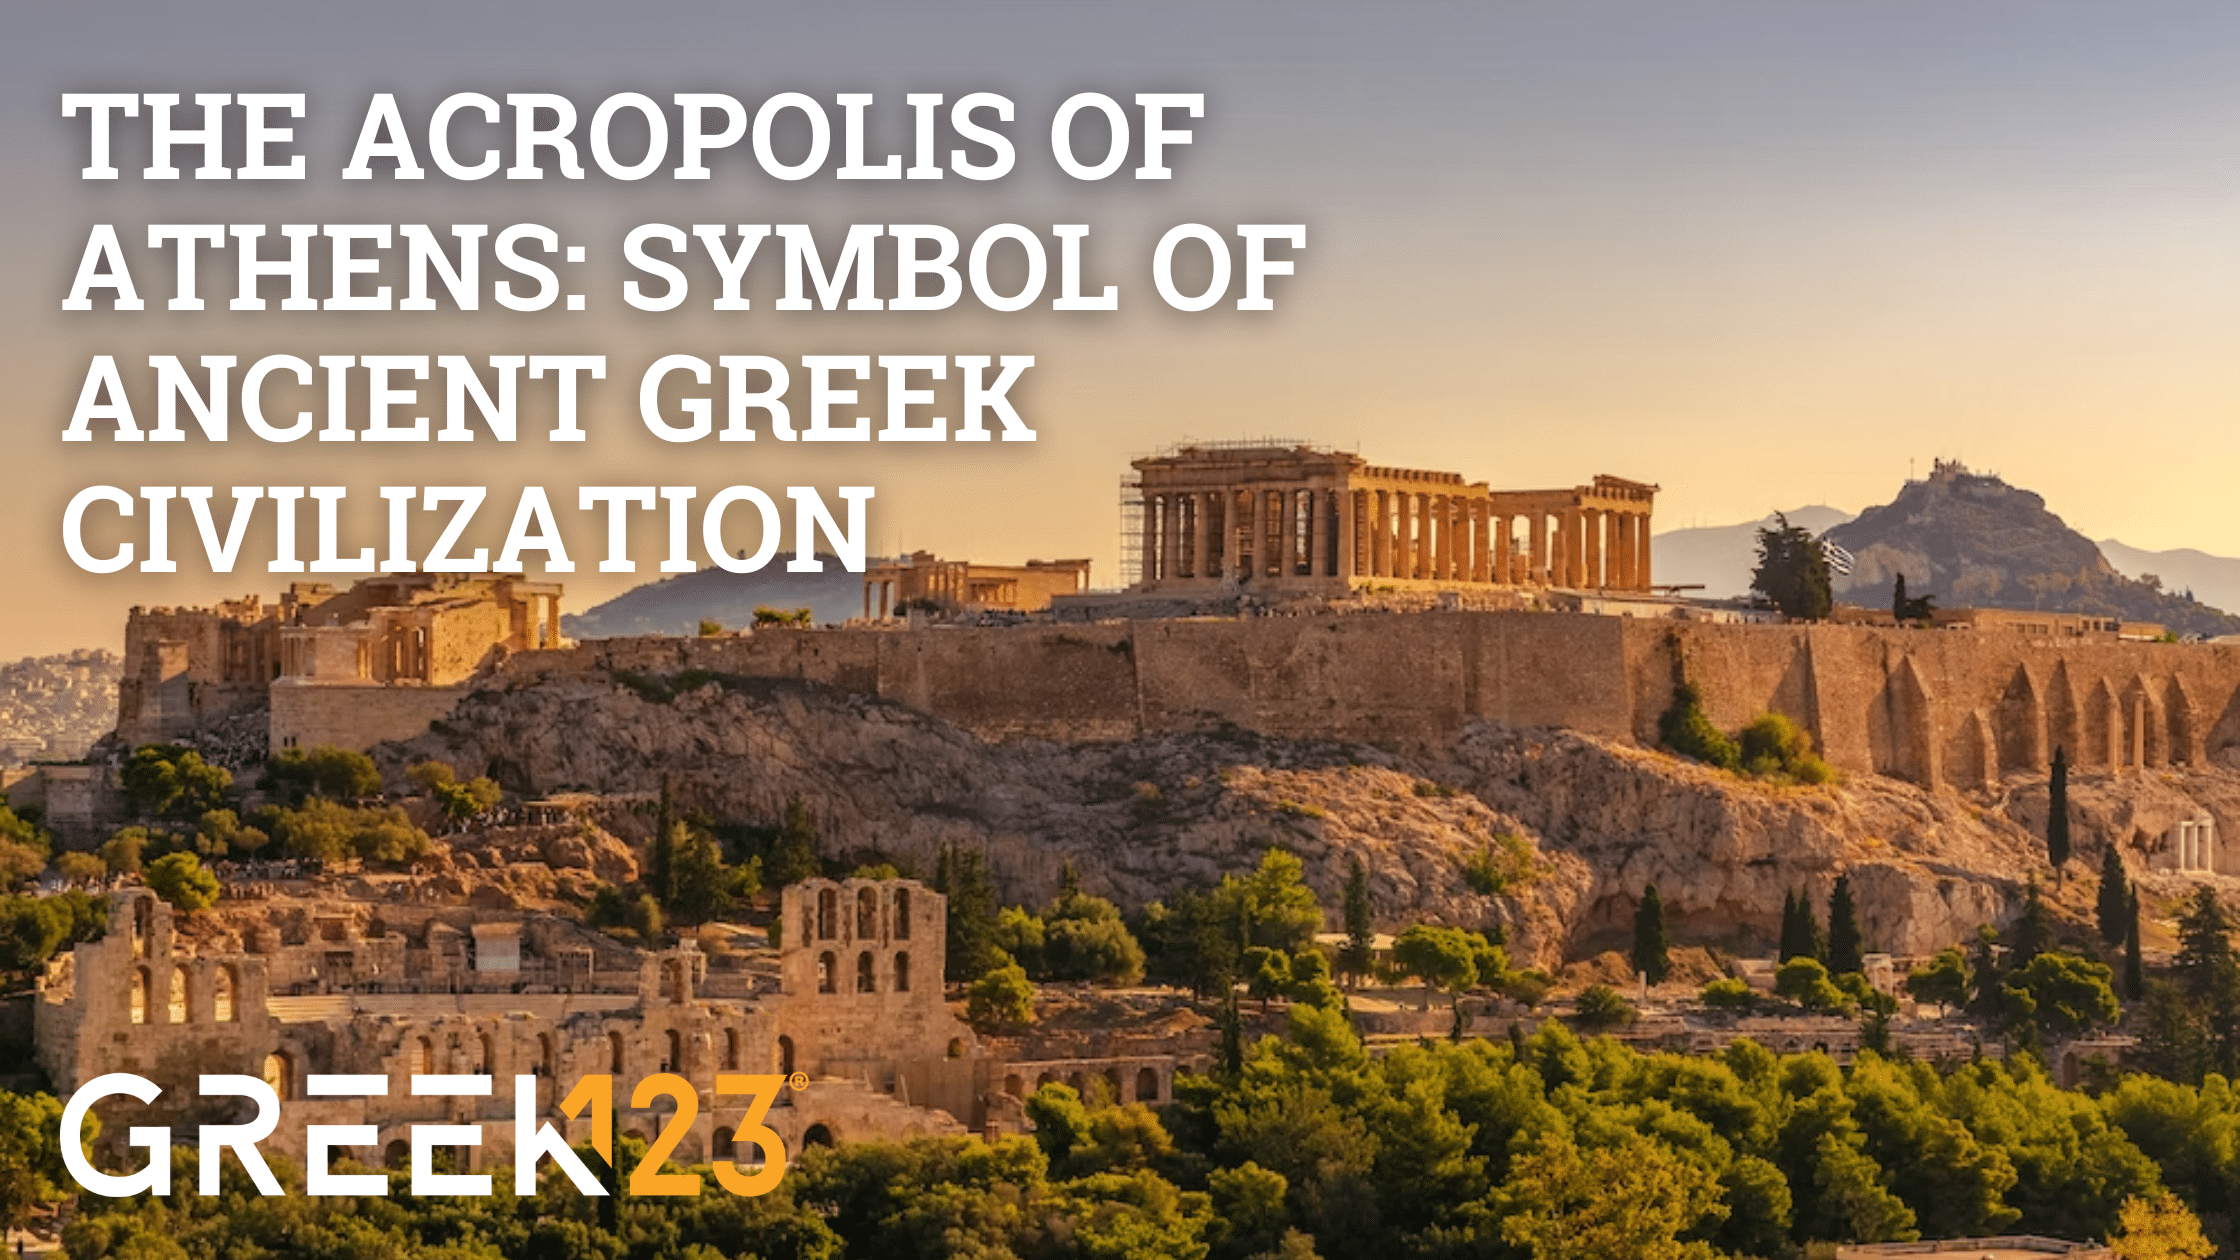 The Acropolis of Athens: Symbol of Ancient Greek Civilization